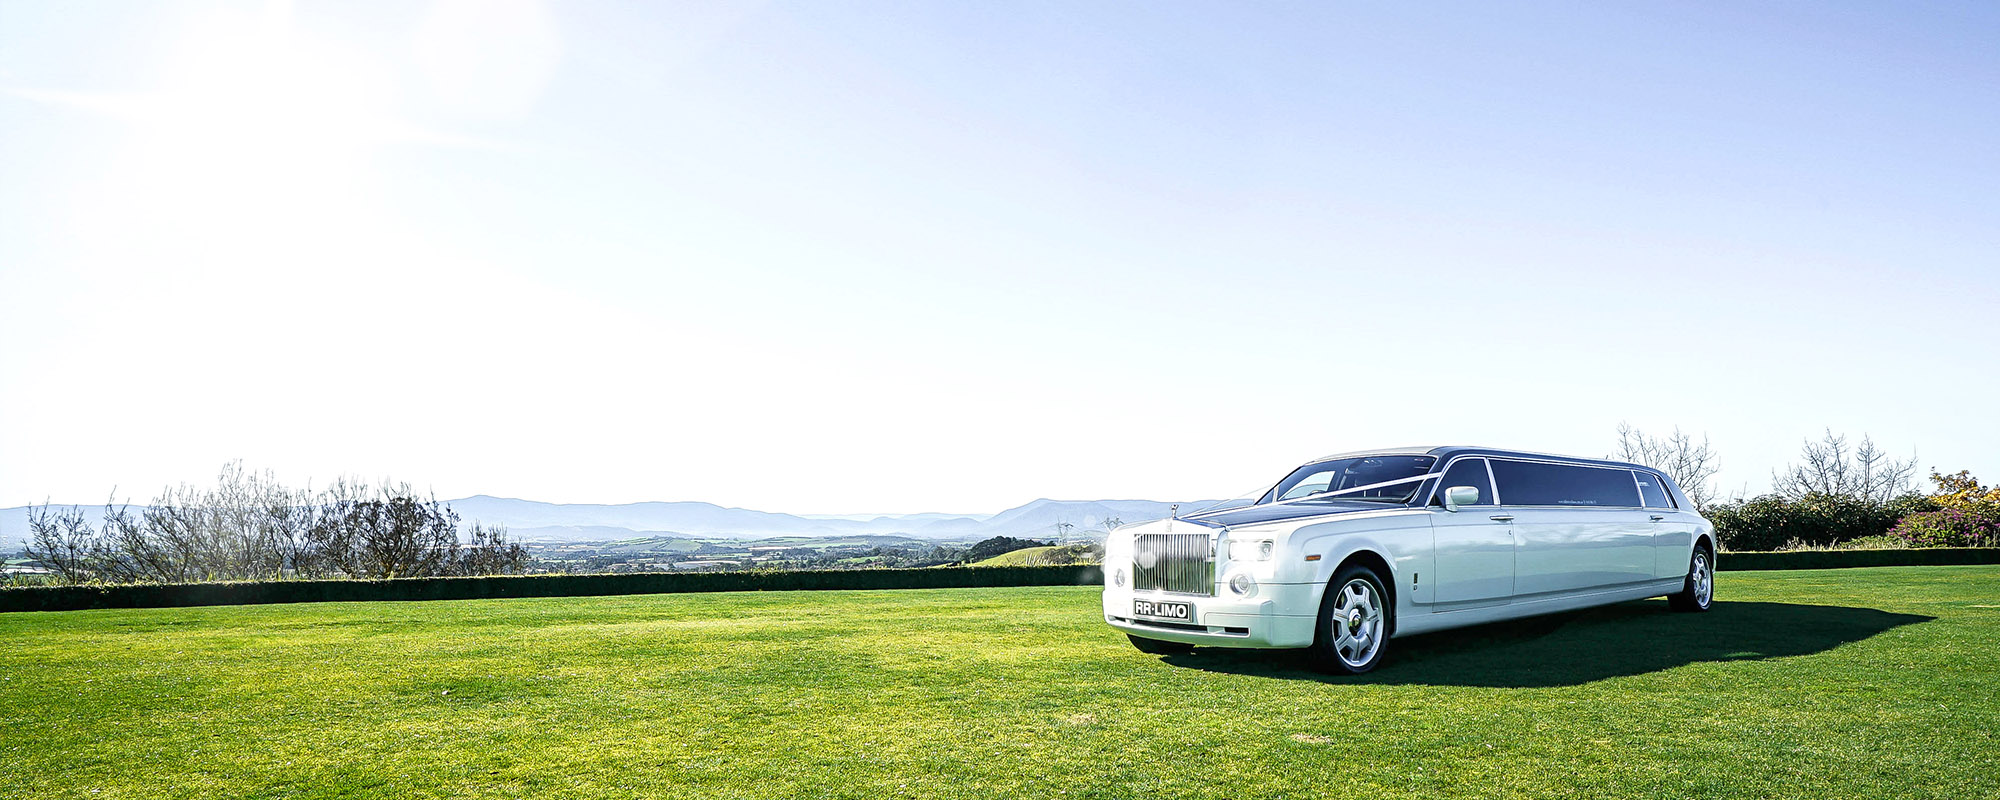 Rolls Royce Limo Hire - Wedding car hire Melbourne